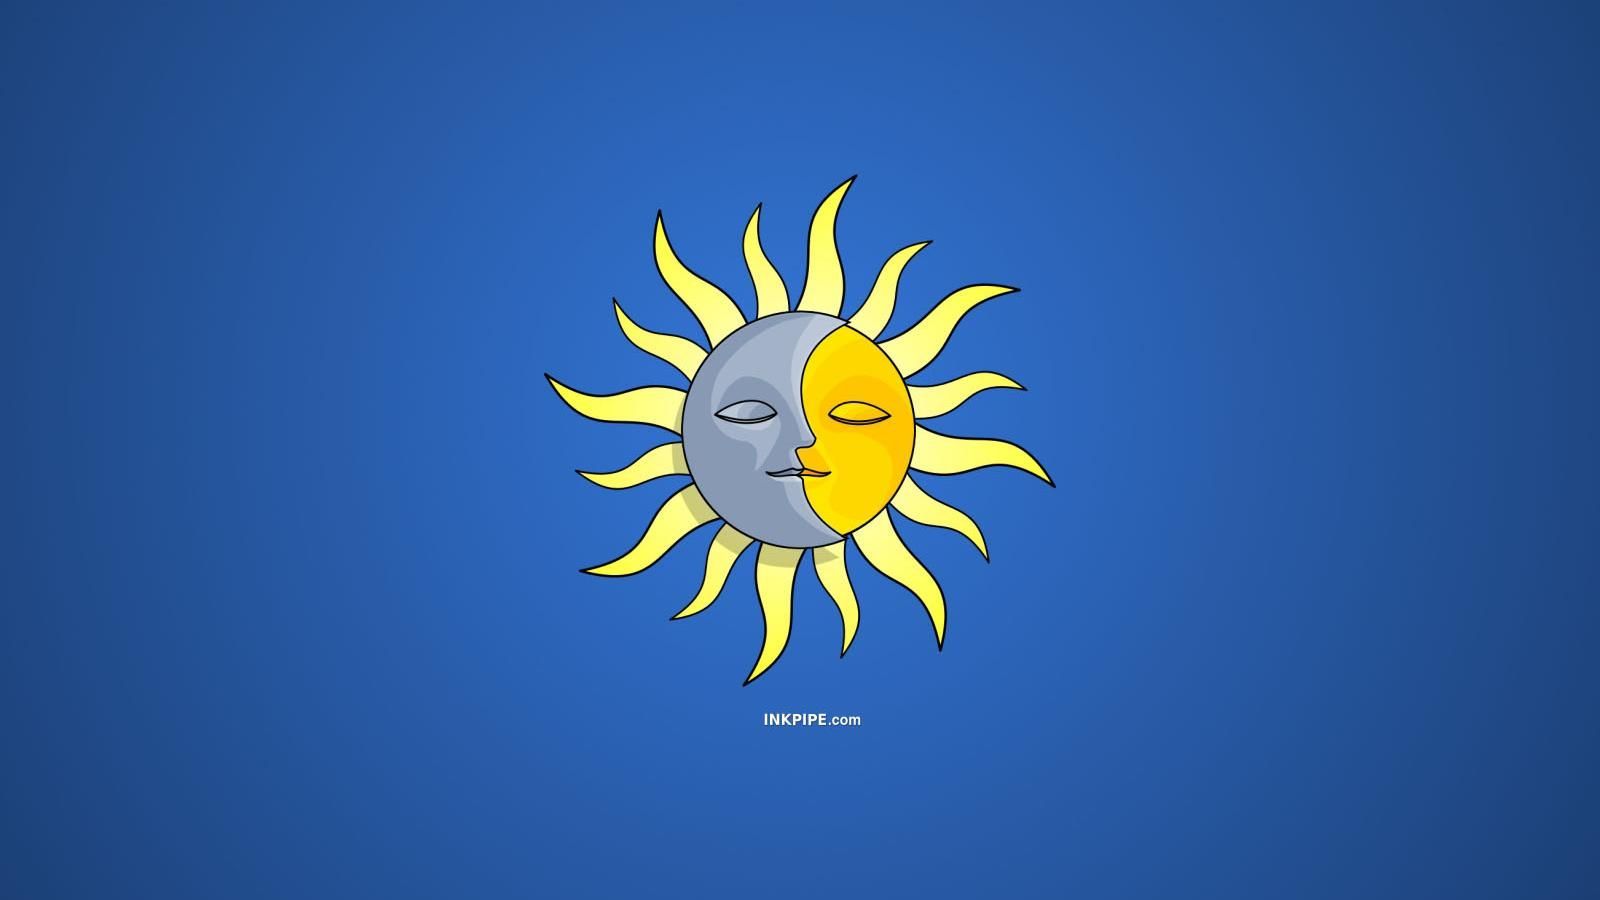 The sun and the moon wallpaper - Digital Art wallpapers - #32921 - Sun